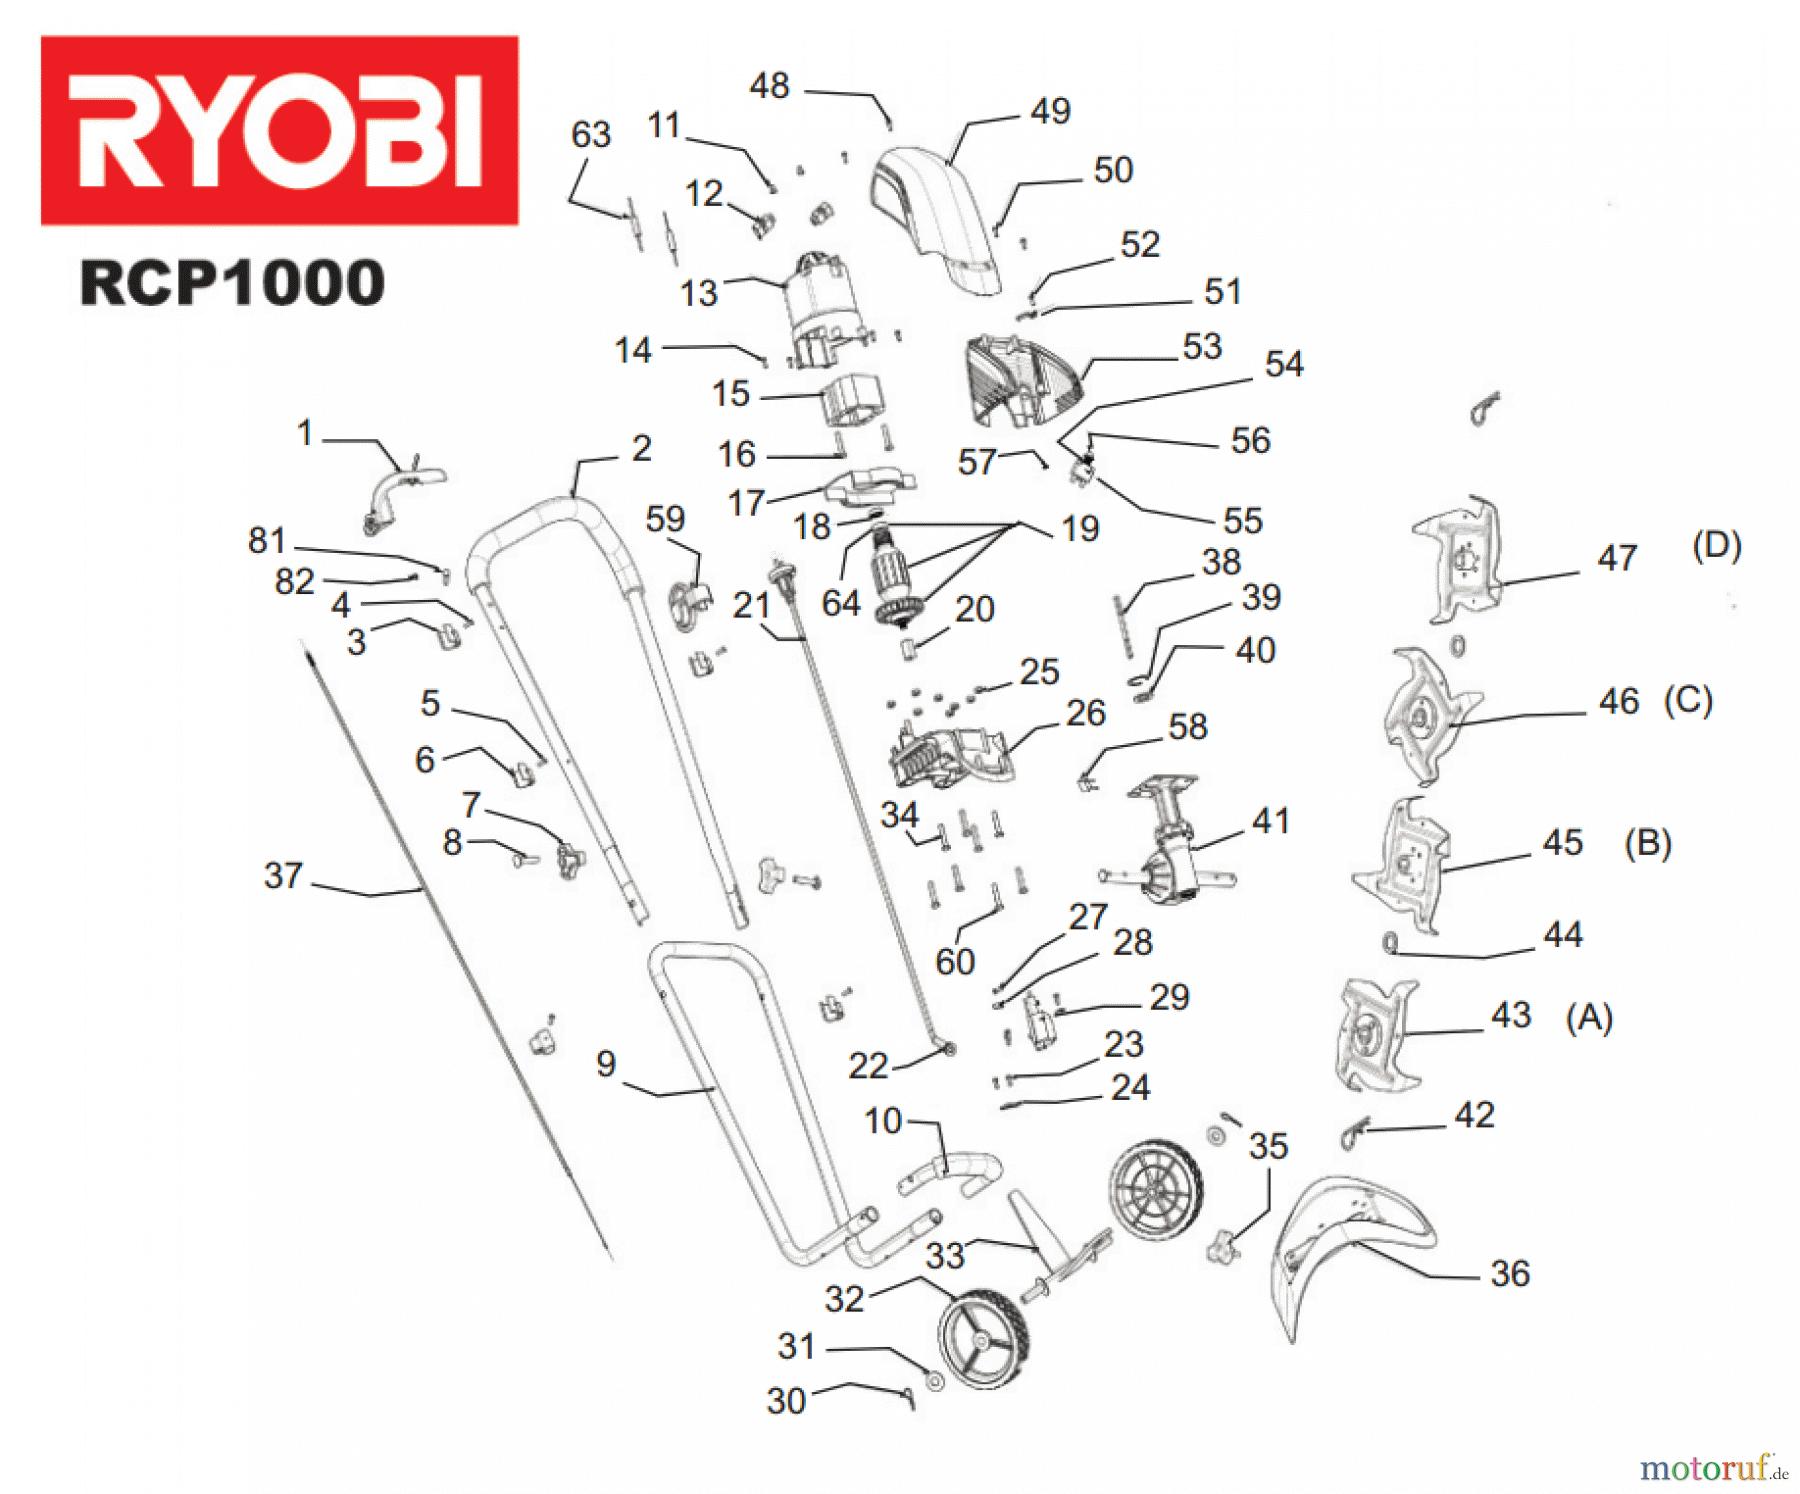  Ryobi Bodenhacken Kultivator RCP1000 Seite 1